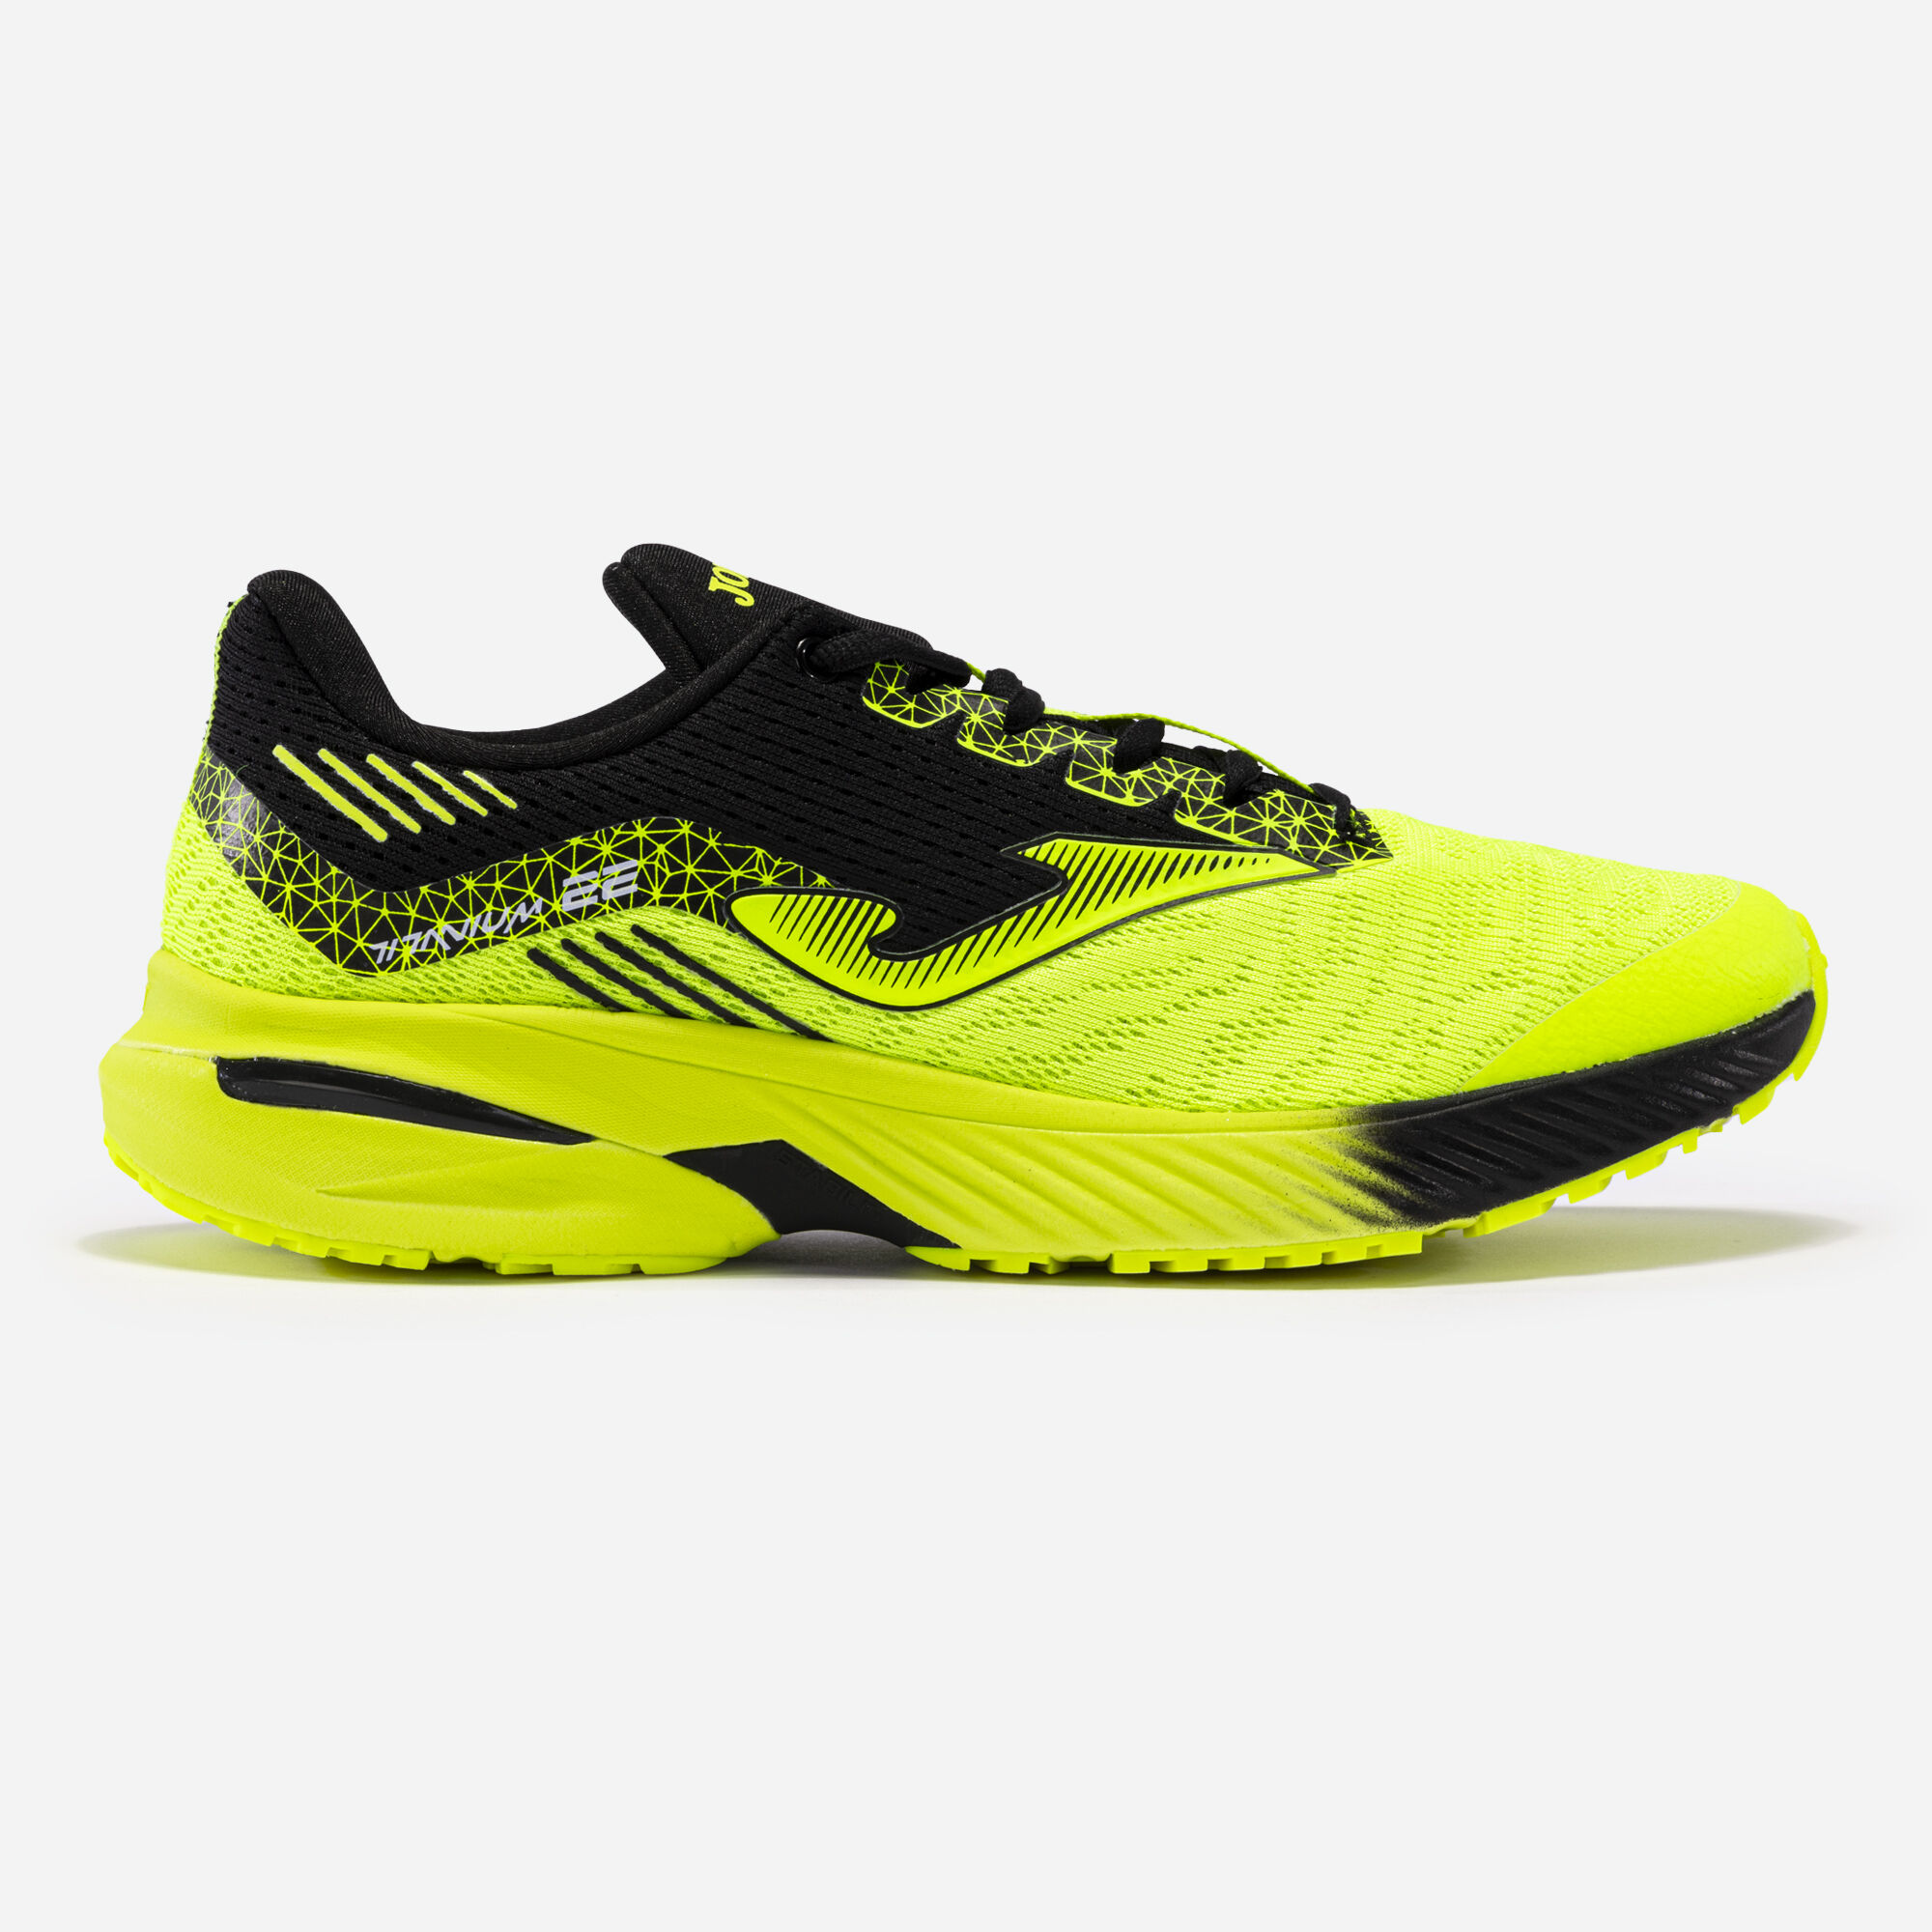 Running shoes Titanium 23 man fluorescent yellow black